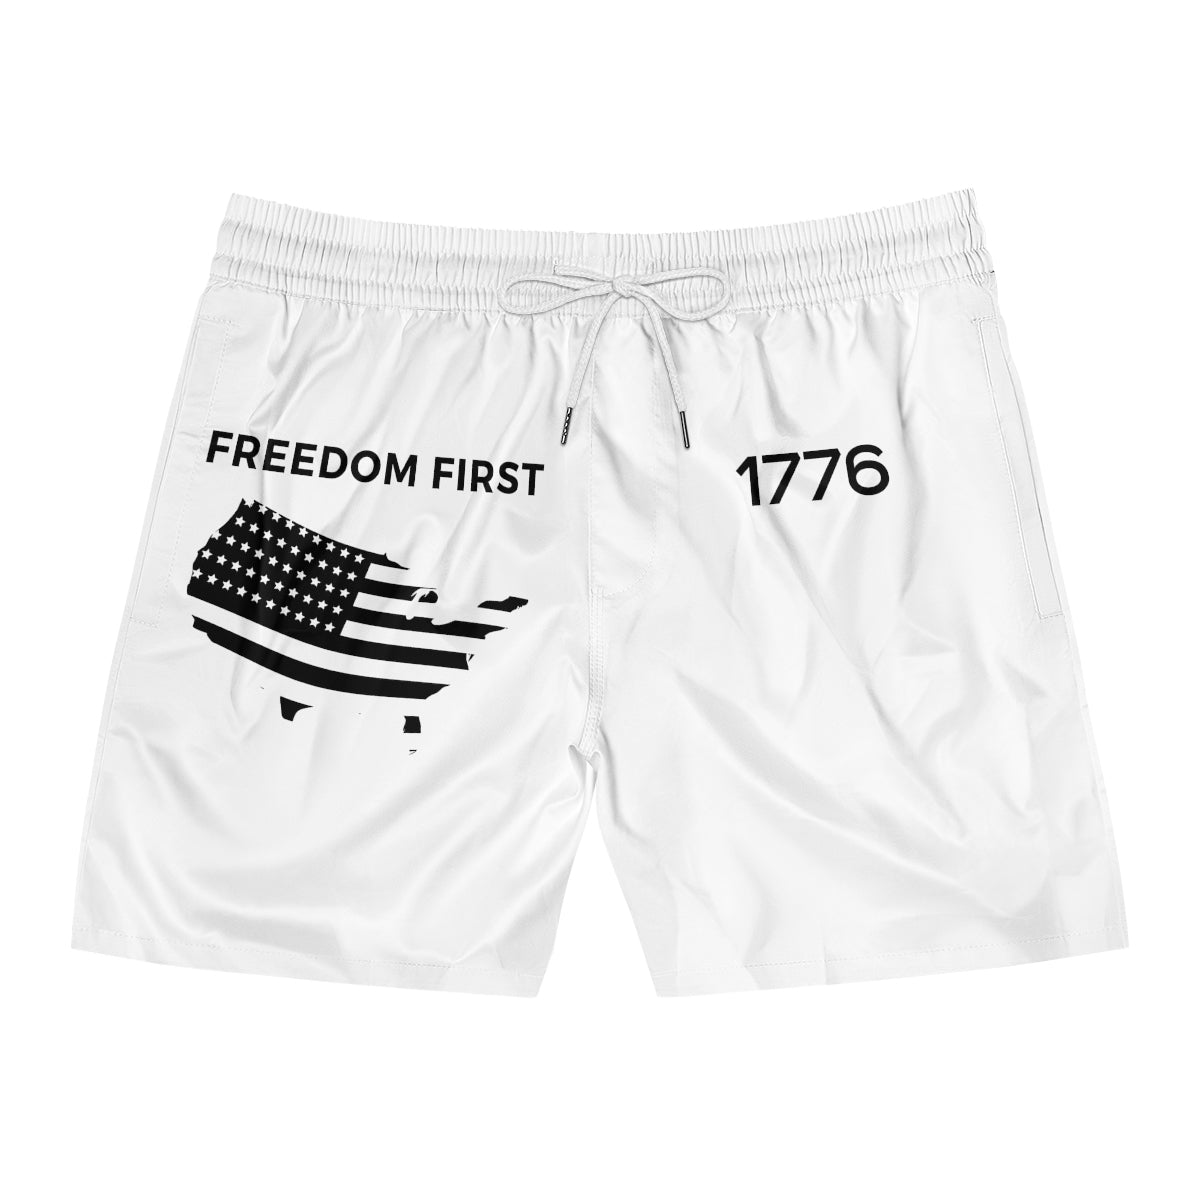 Free Swim - Trunks - Freedom First Supply